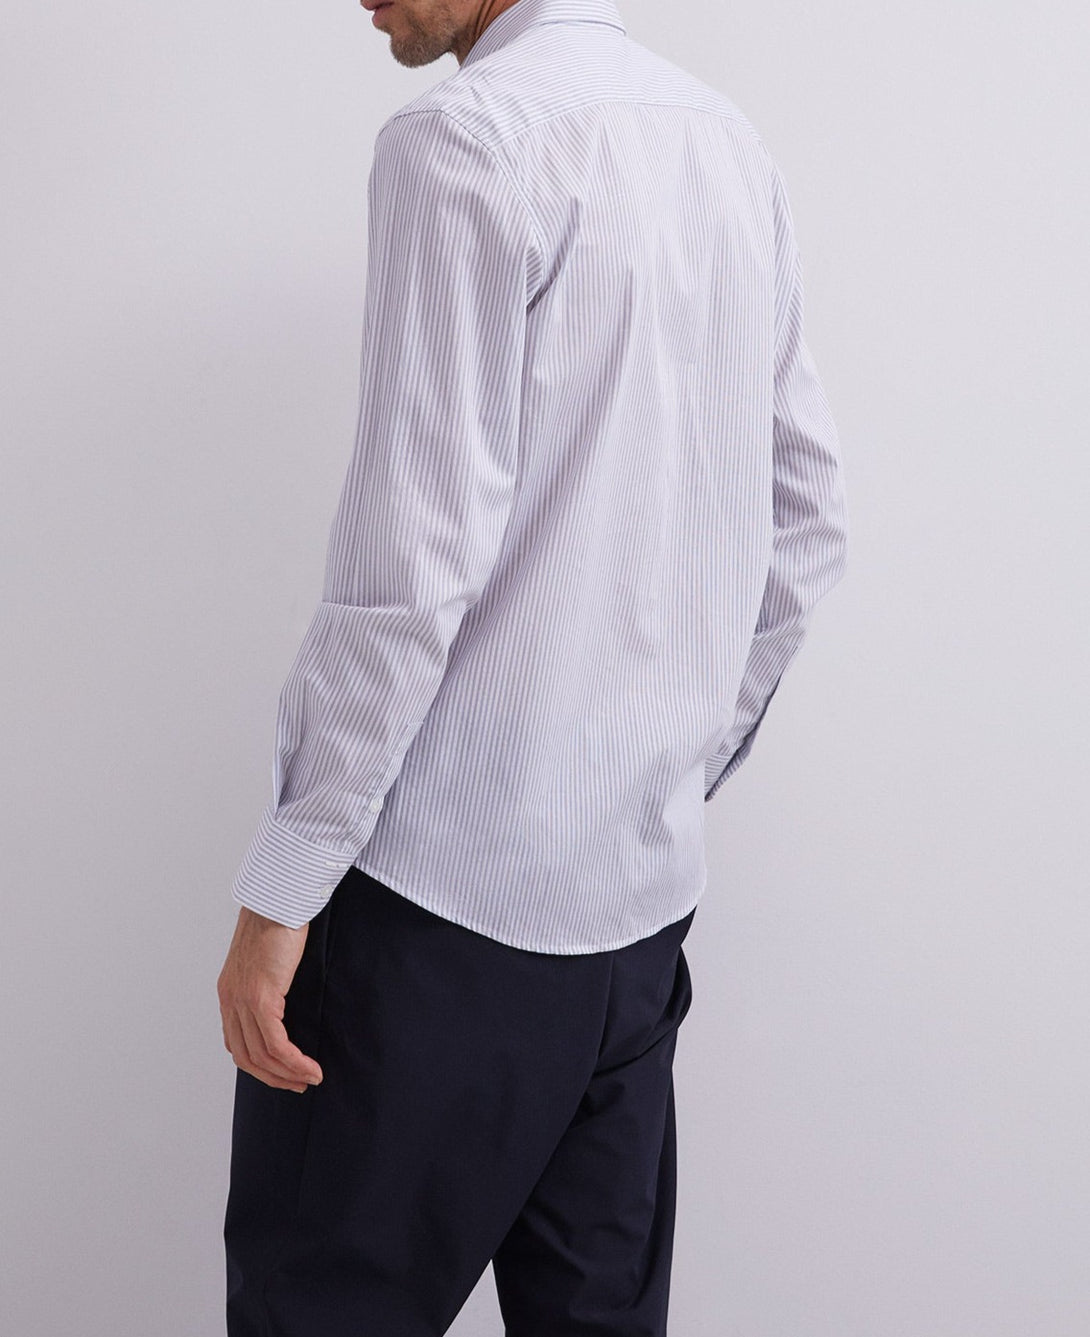 Men Long-Sleeve Shirt | White/Blue Stripe Stripes Cotton Shirt by Spanish designer Adolfo Dominguez